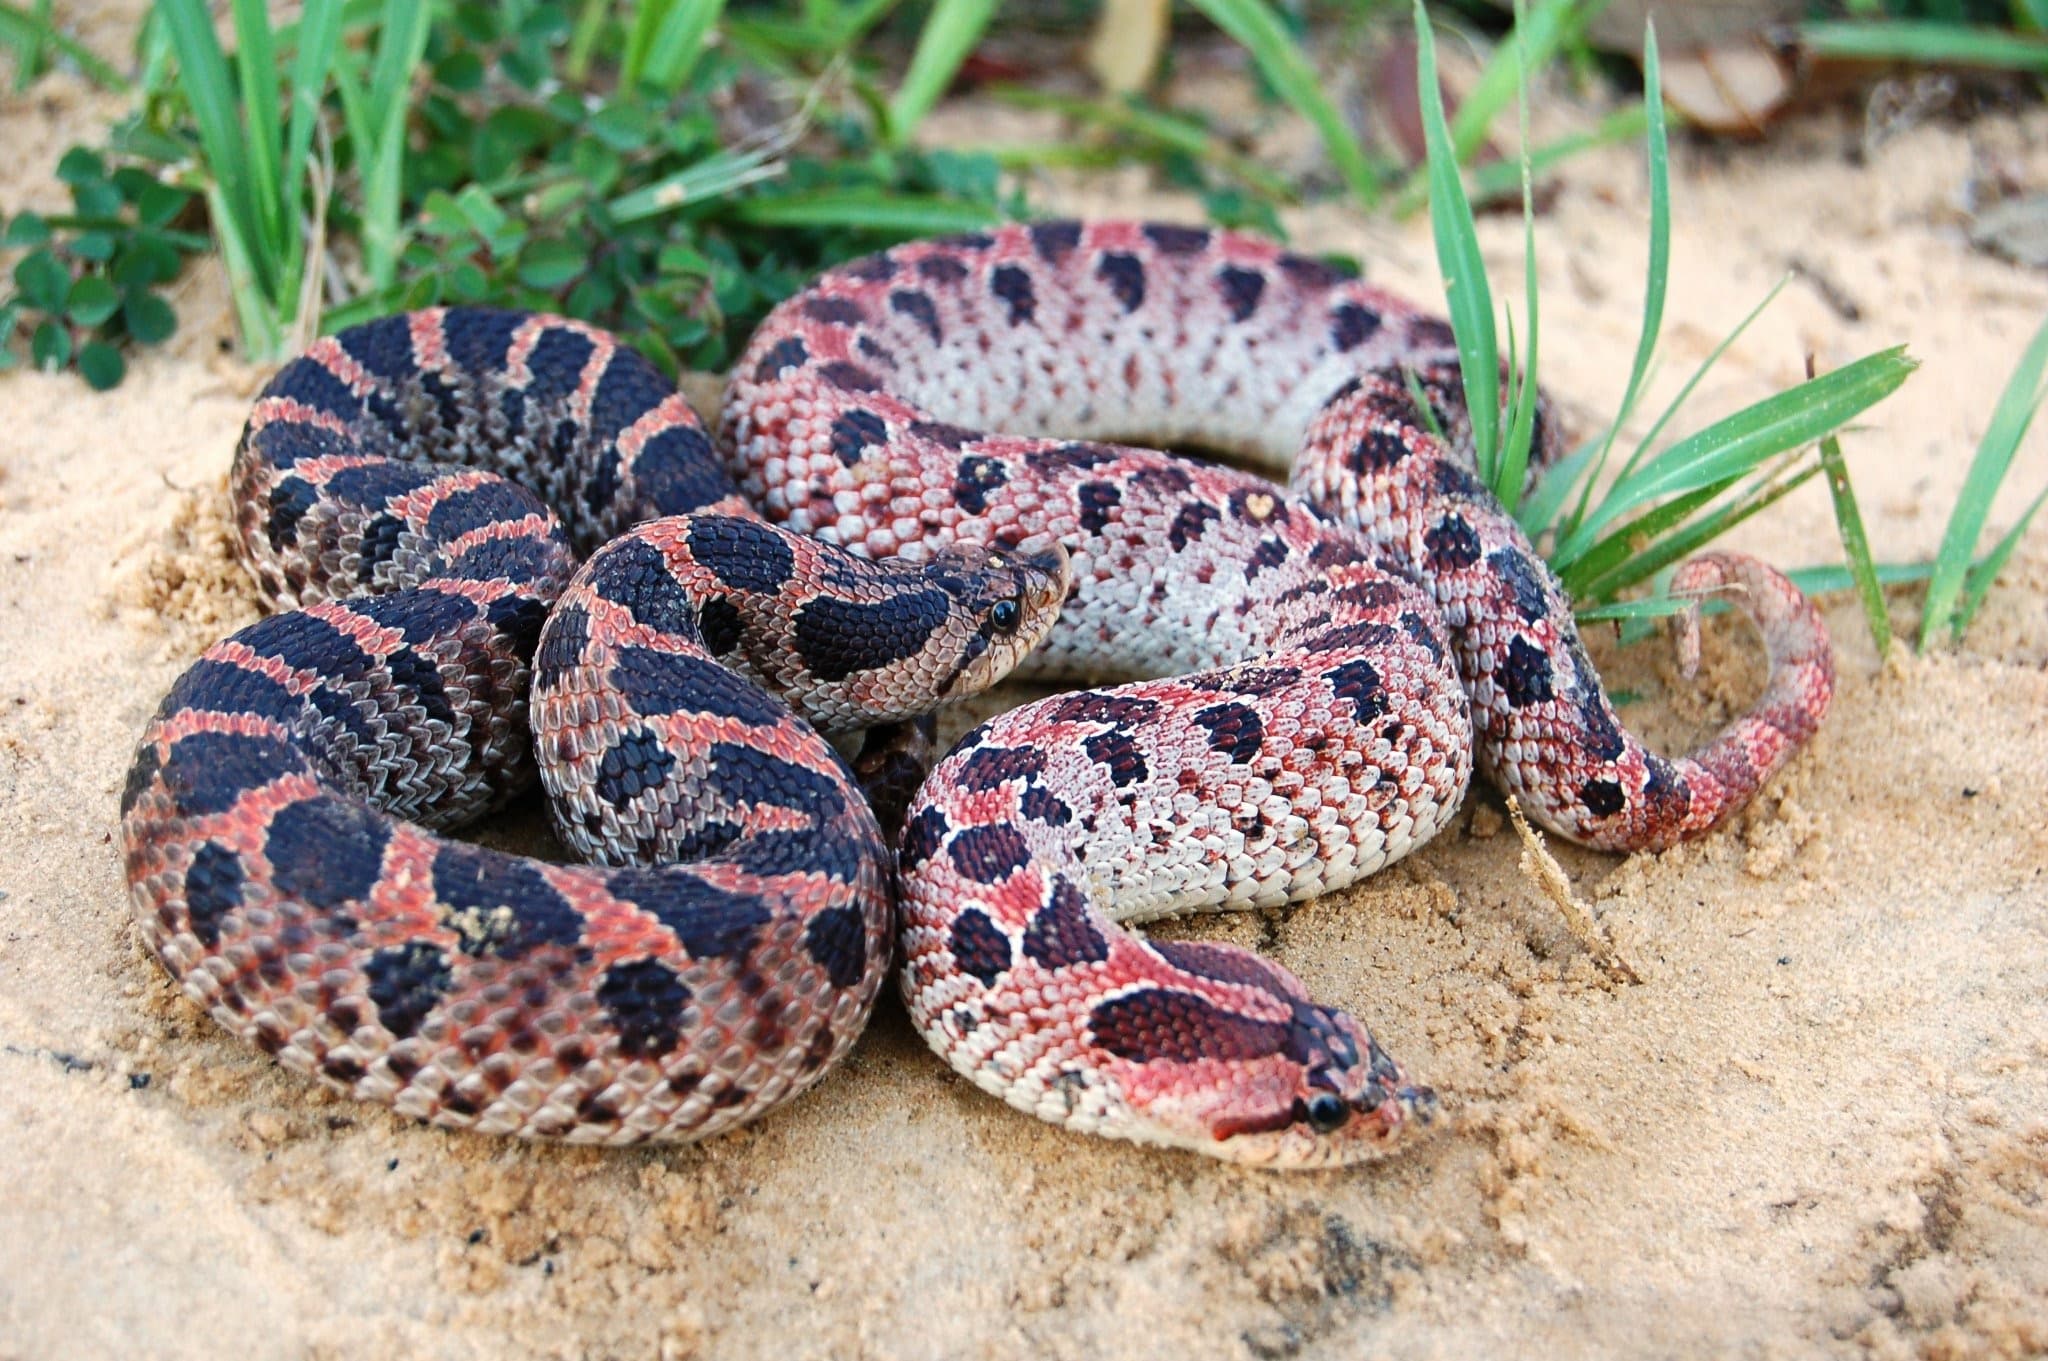 Southern Hognose Snake – Quest for the Longleaf Pine Ecosystem